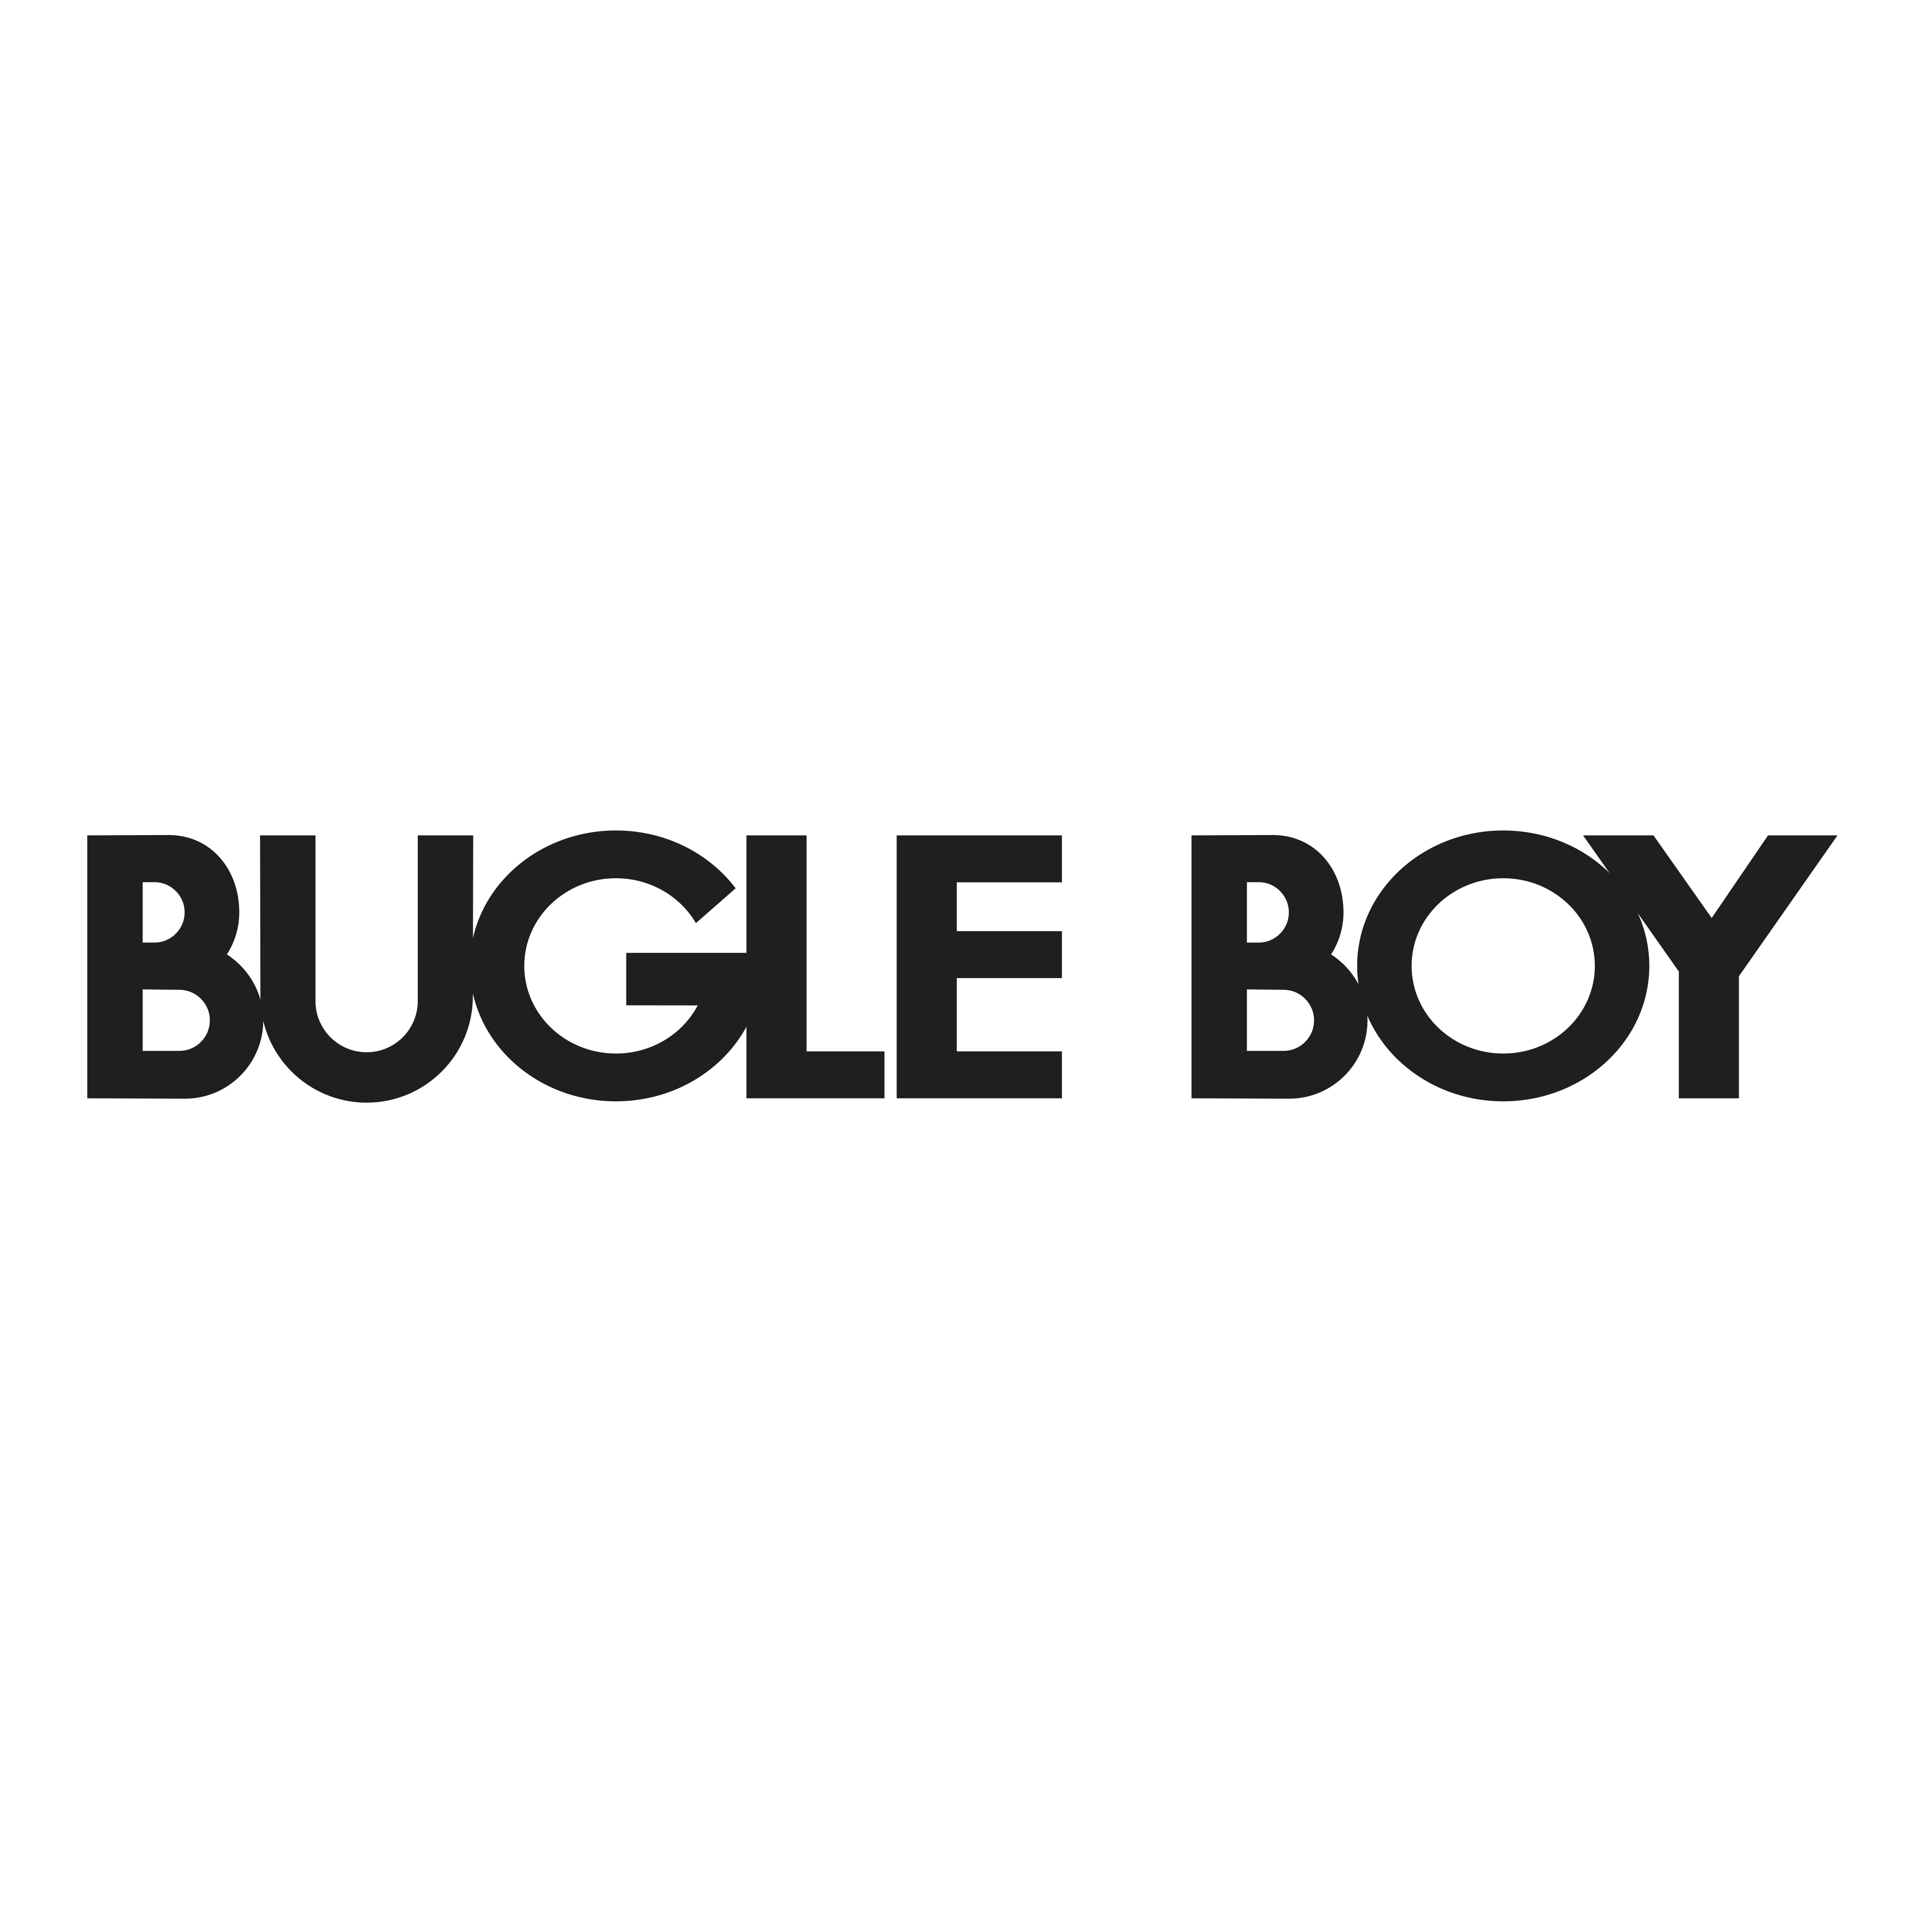 Bugle Boy logo - download.